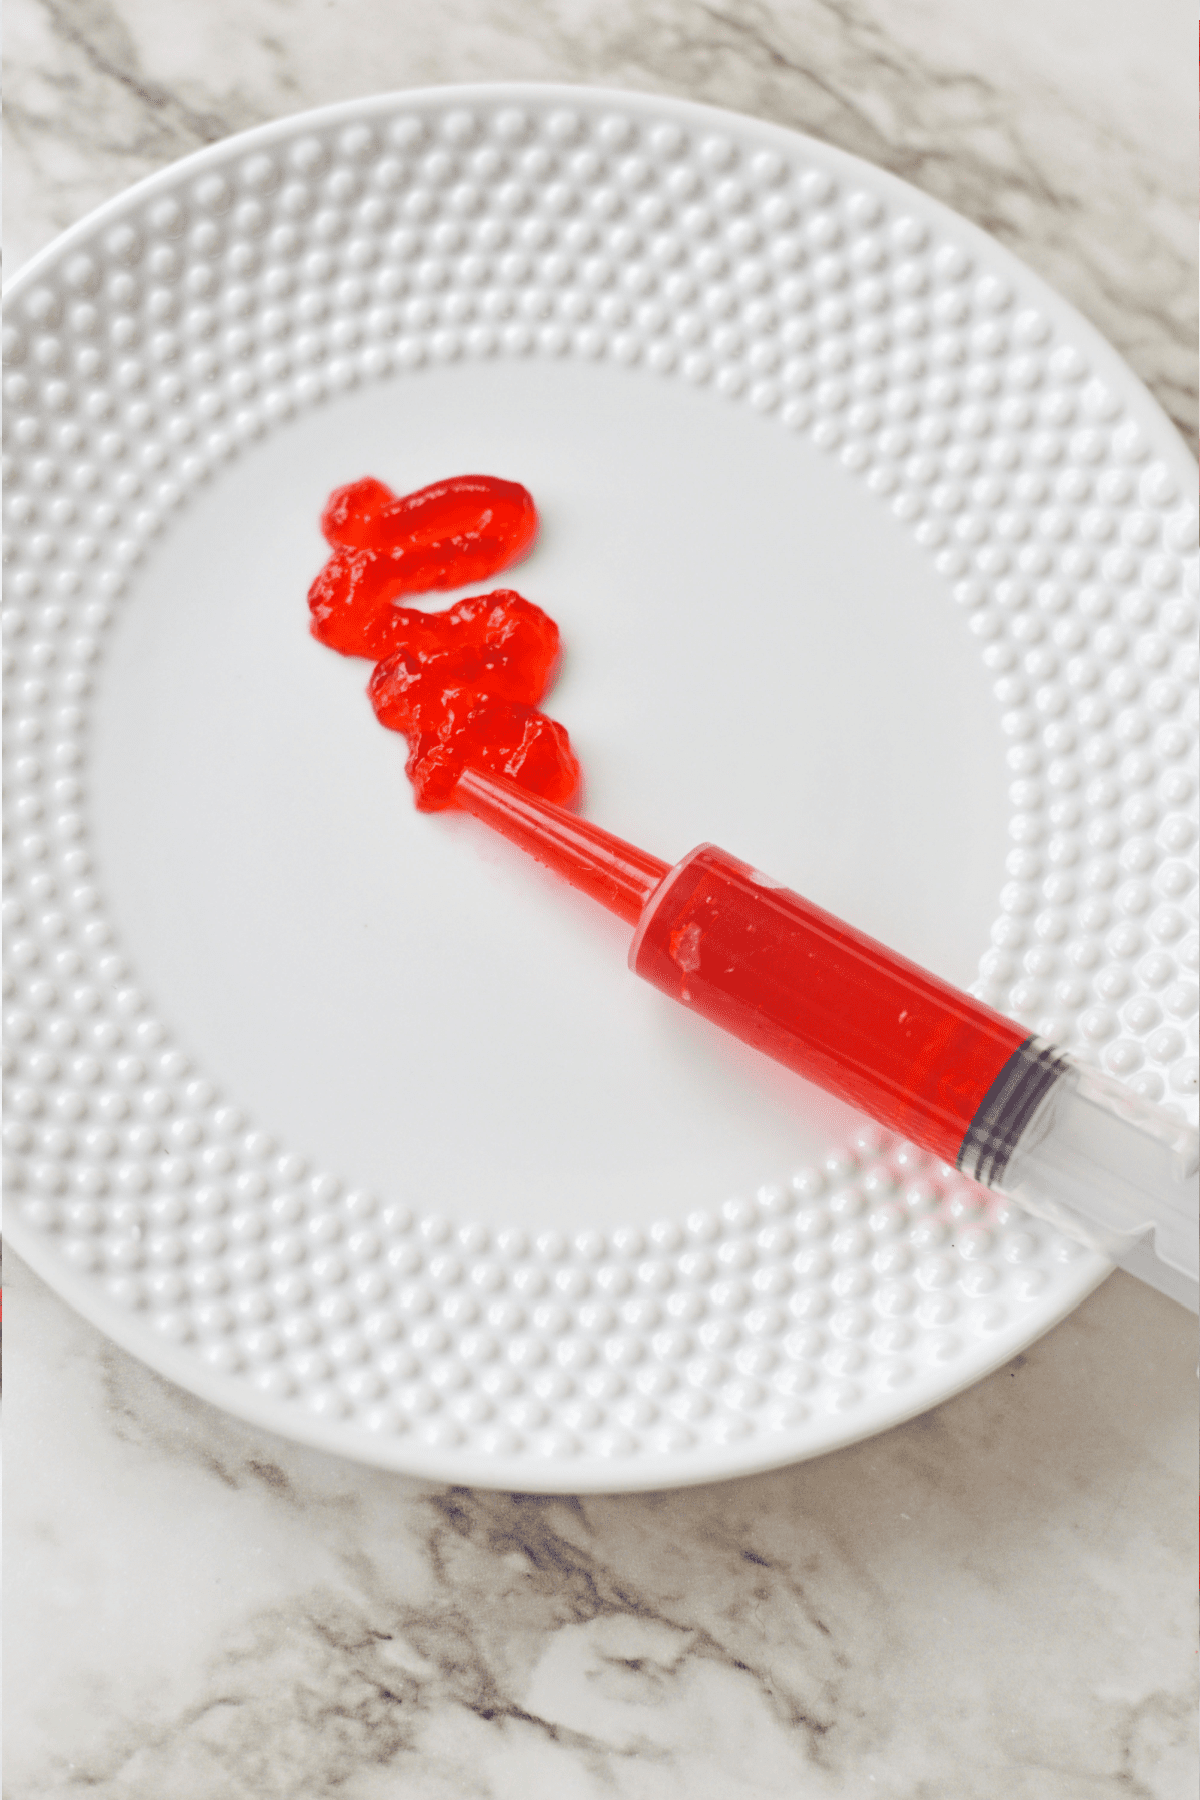 Red jello from jello shot syringe